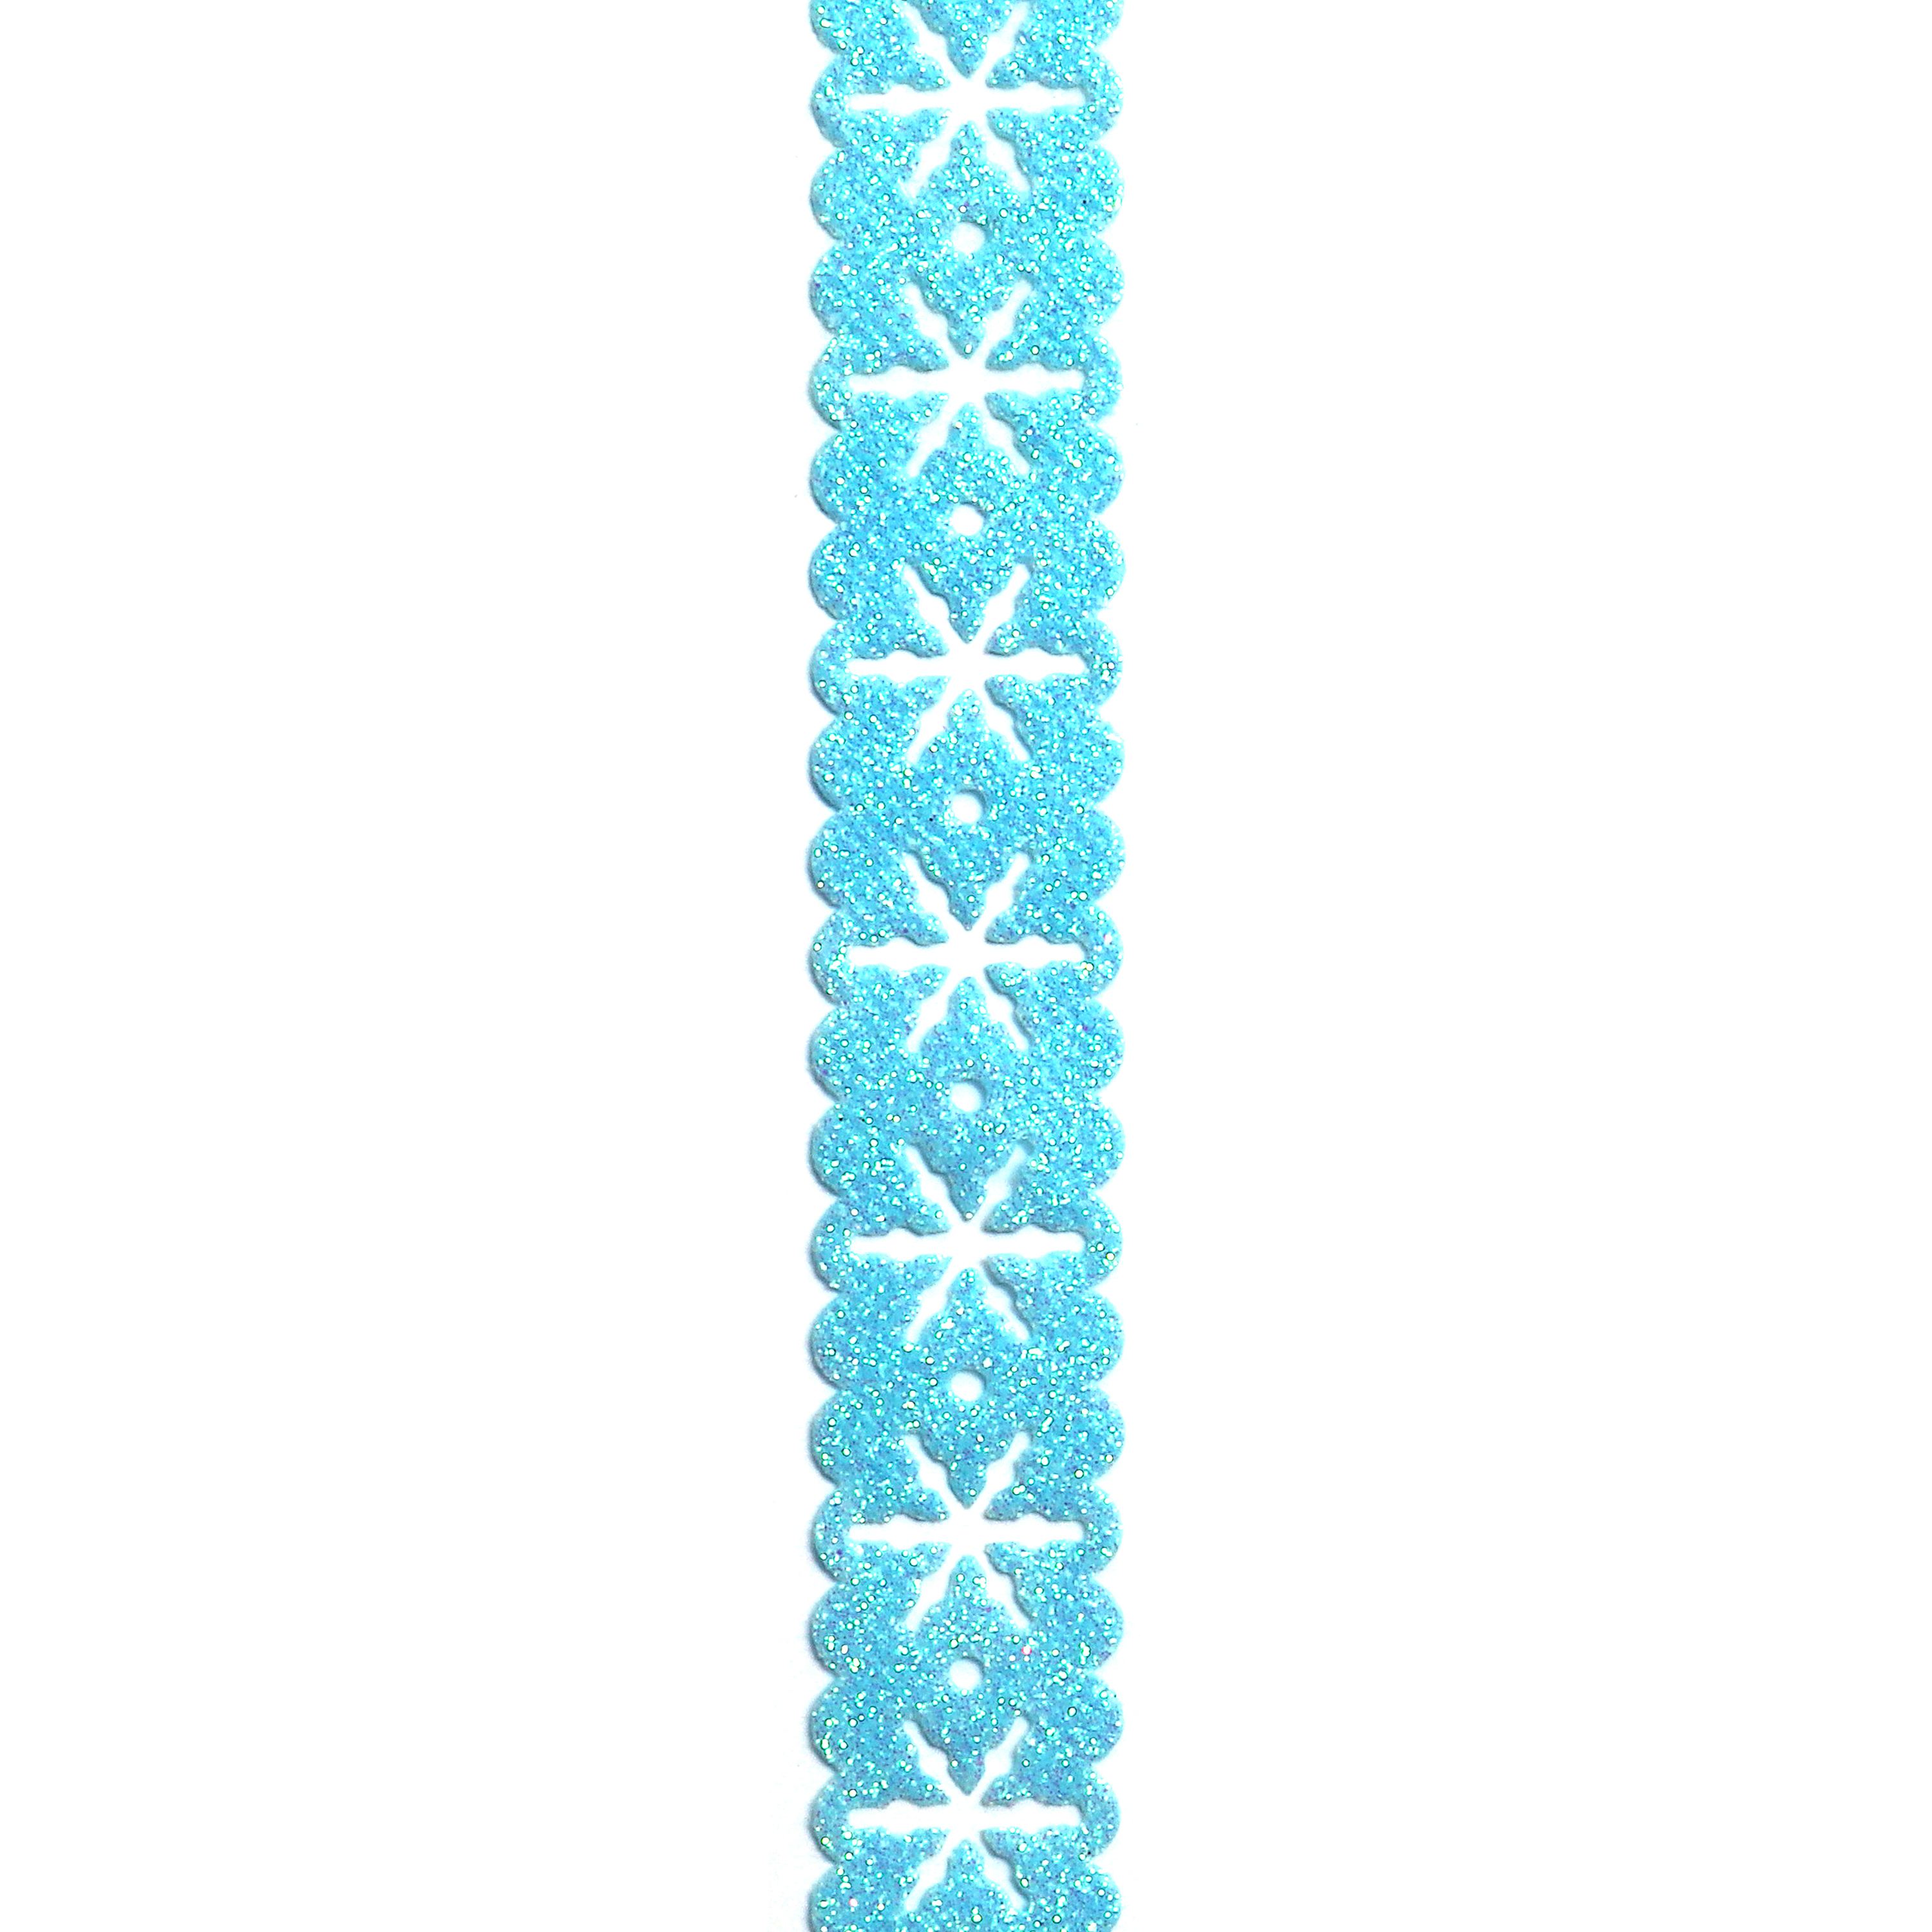 Metallic Blue Die Cut Snowflake Holiday Ribbon, 7/8" x 12 Yards by Gwen Studios - image 3 of 3